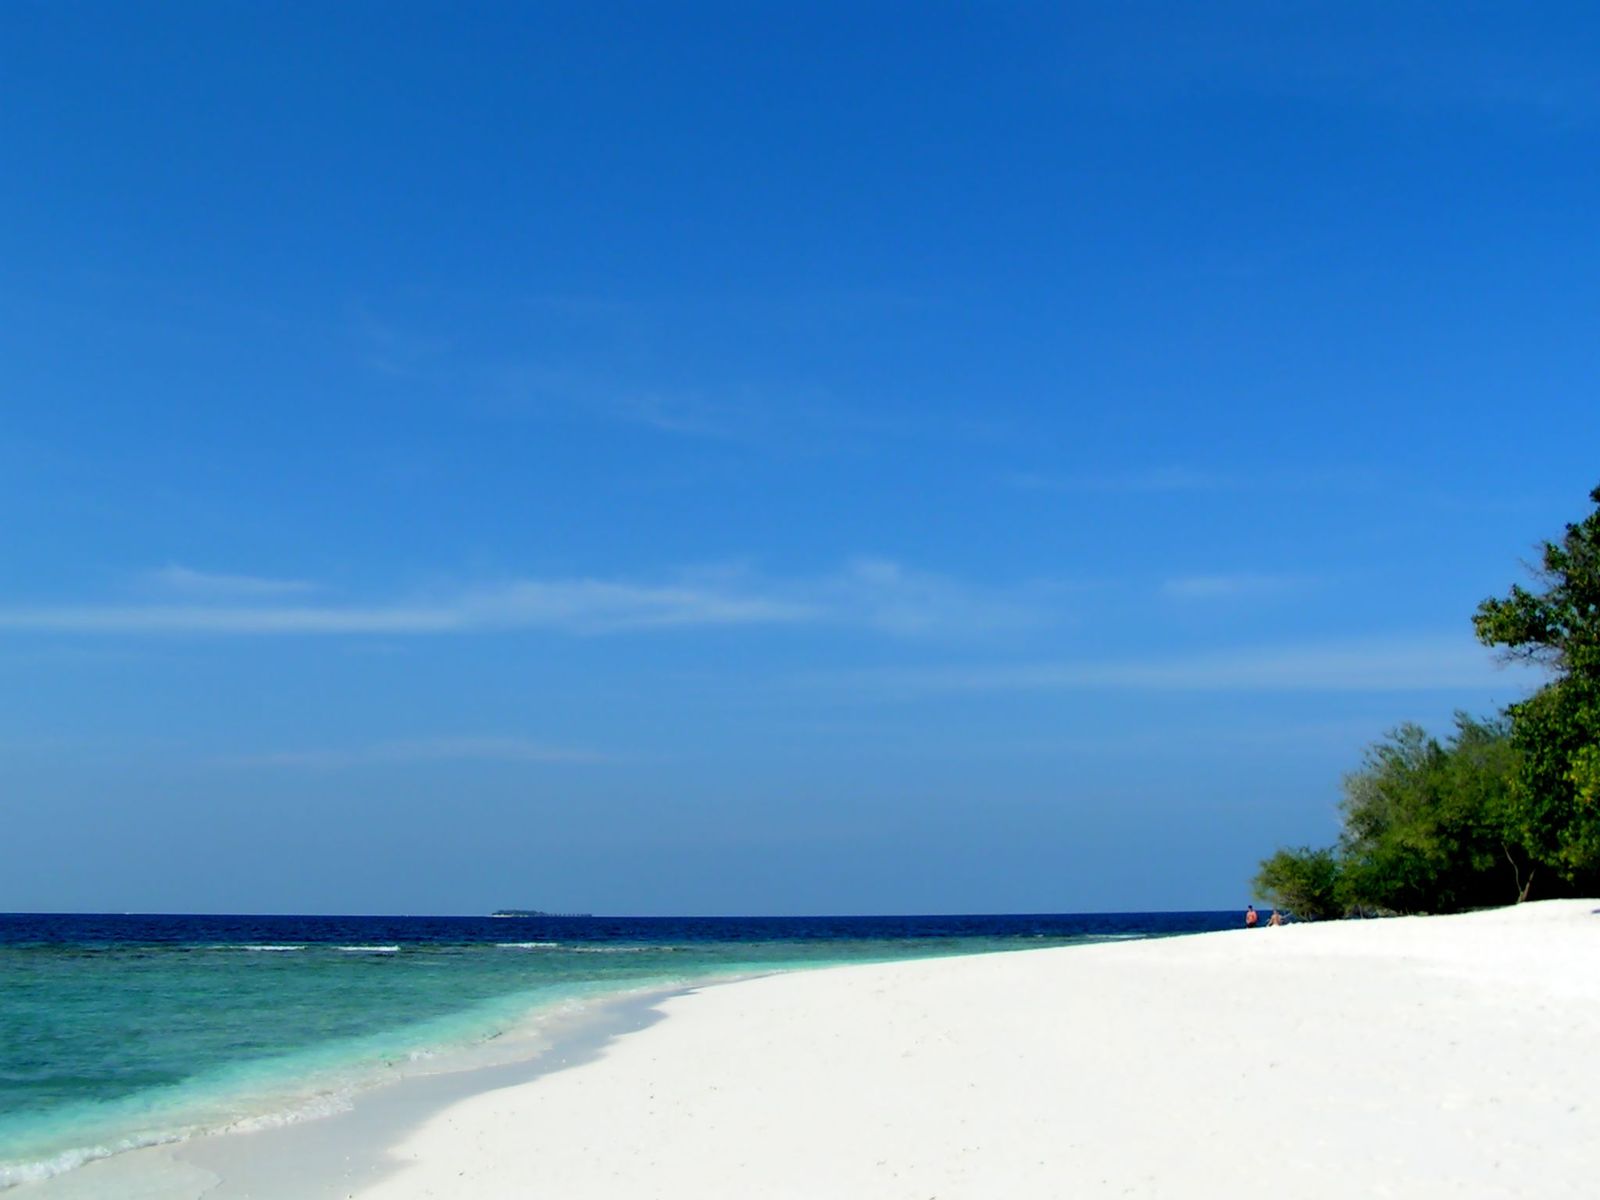 a sandy beach with clear blue ocean water